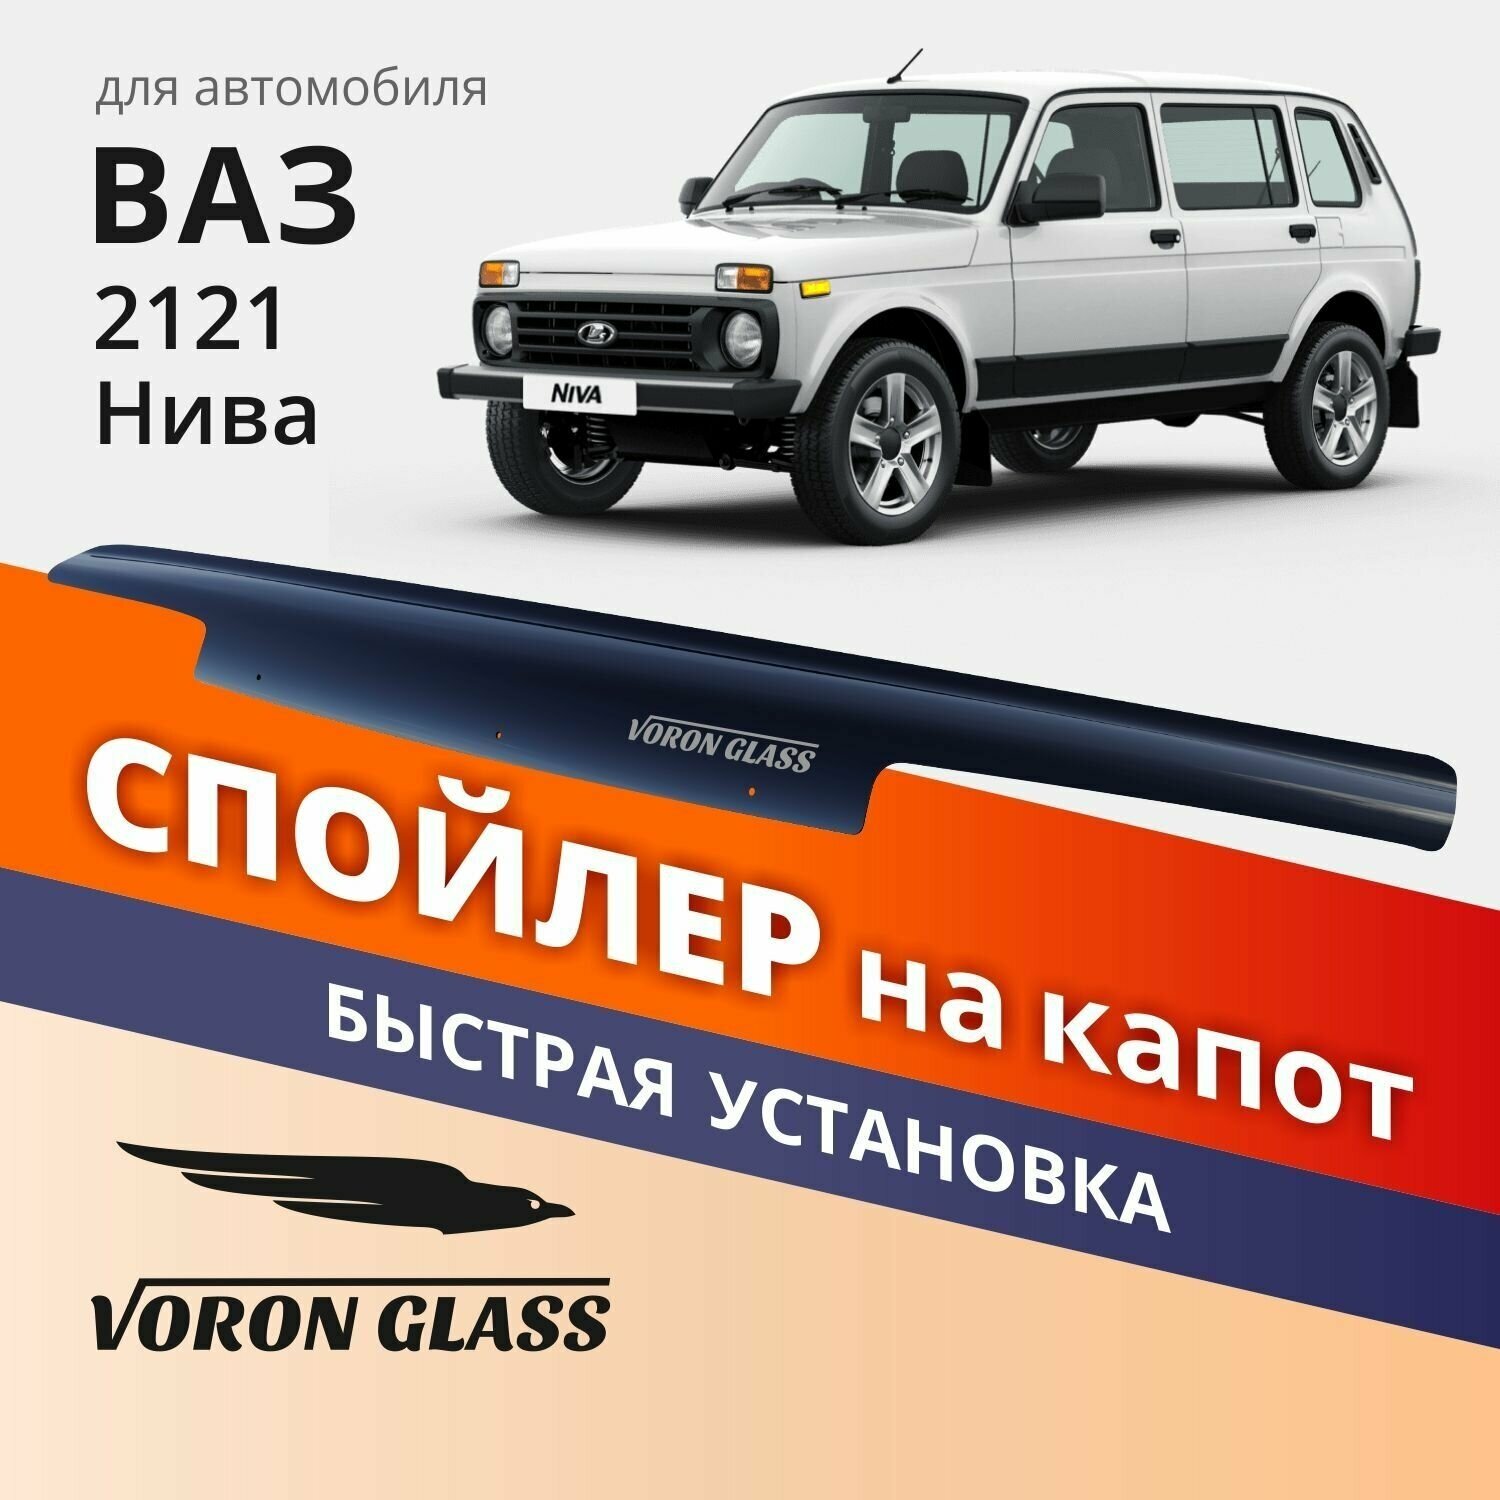 Дефлектор капота спойлер на автомобиль ВАЗ 2121 Нива VORON GLASS